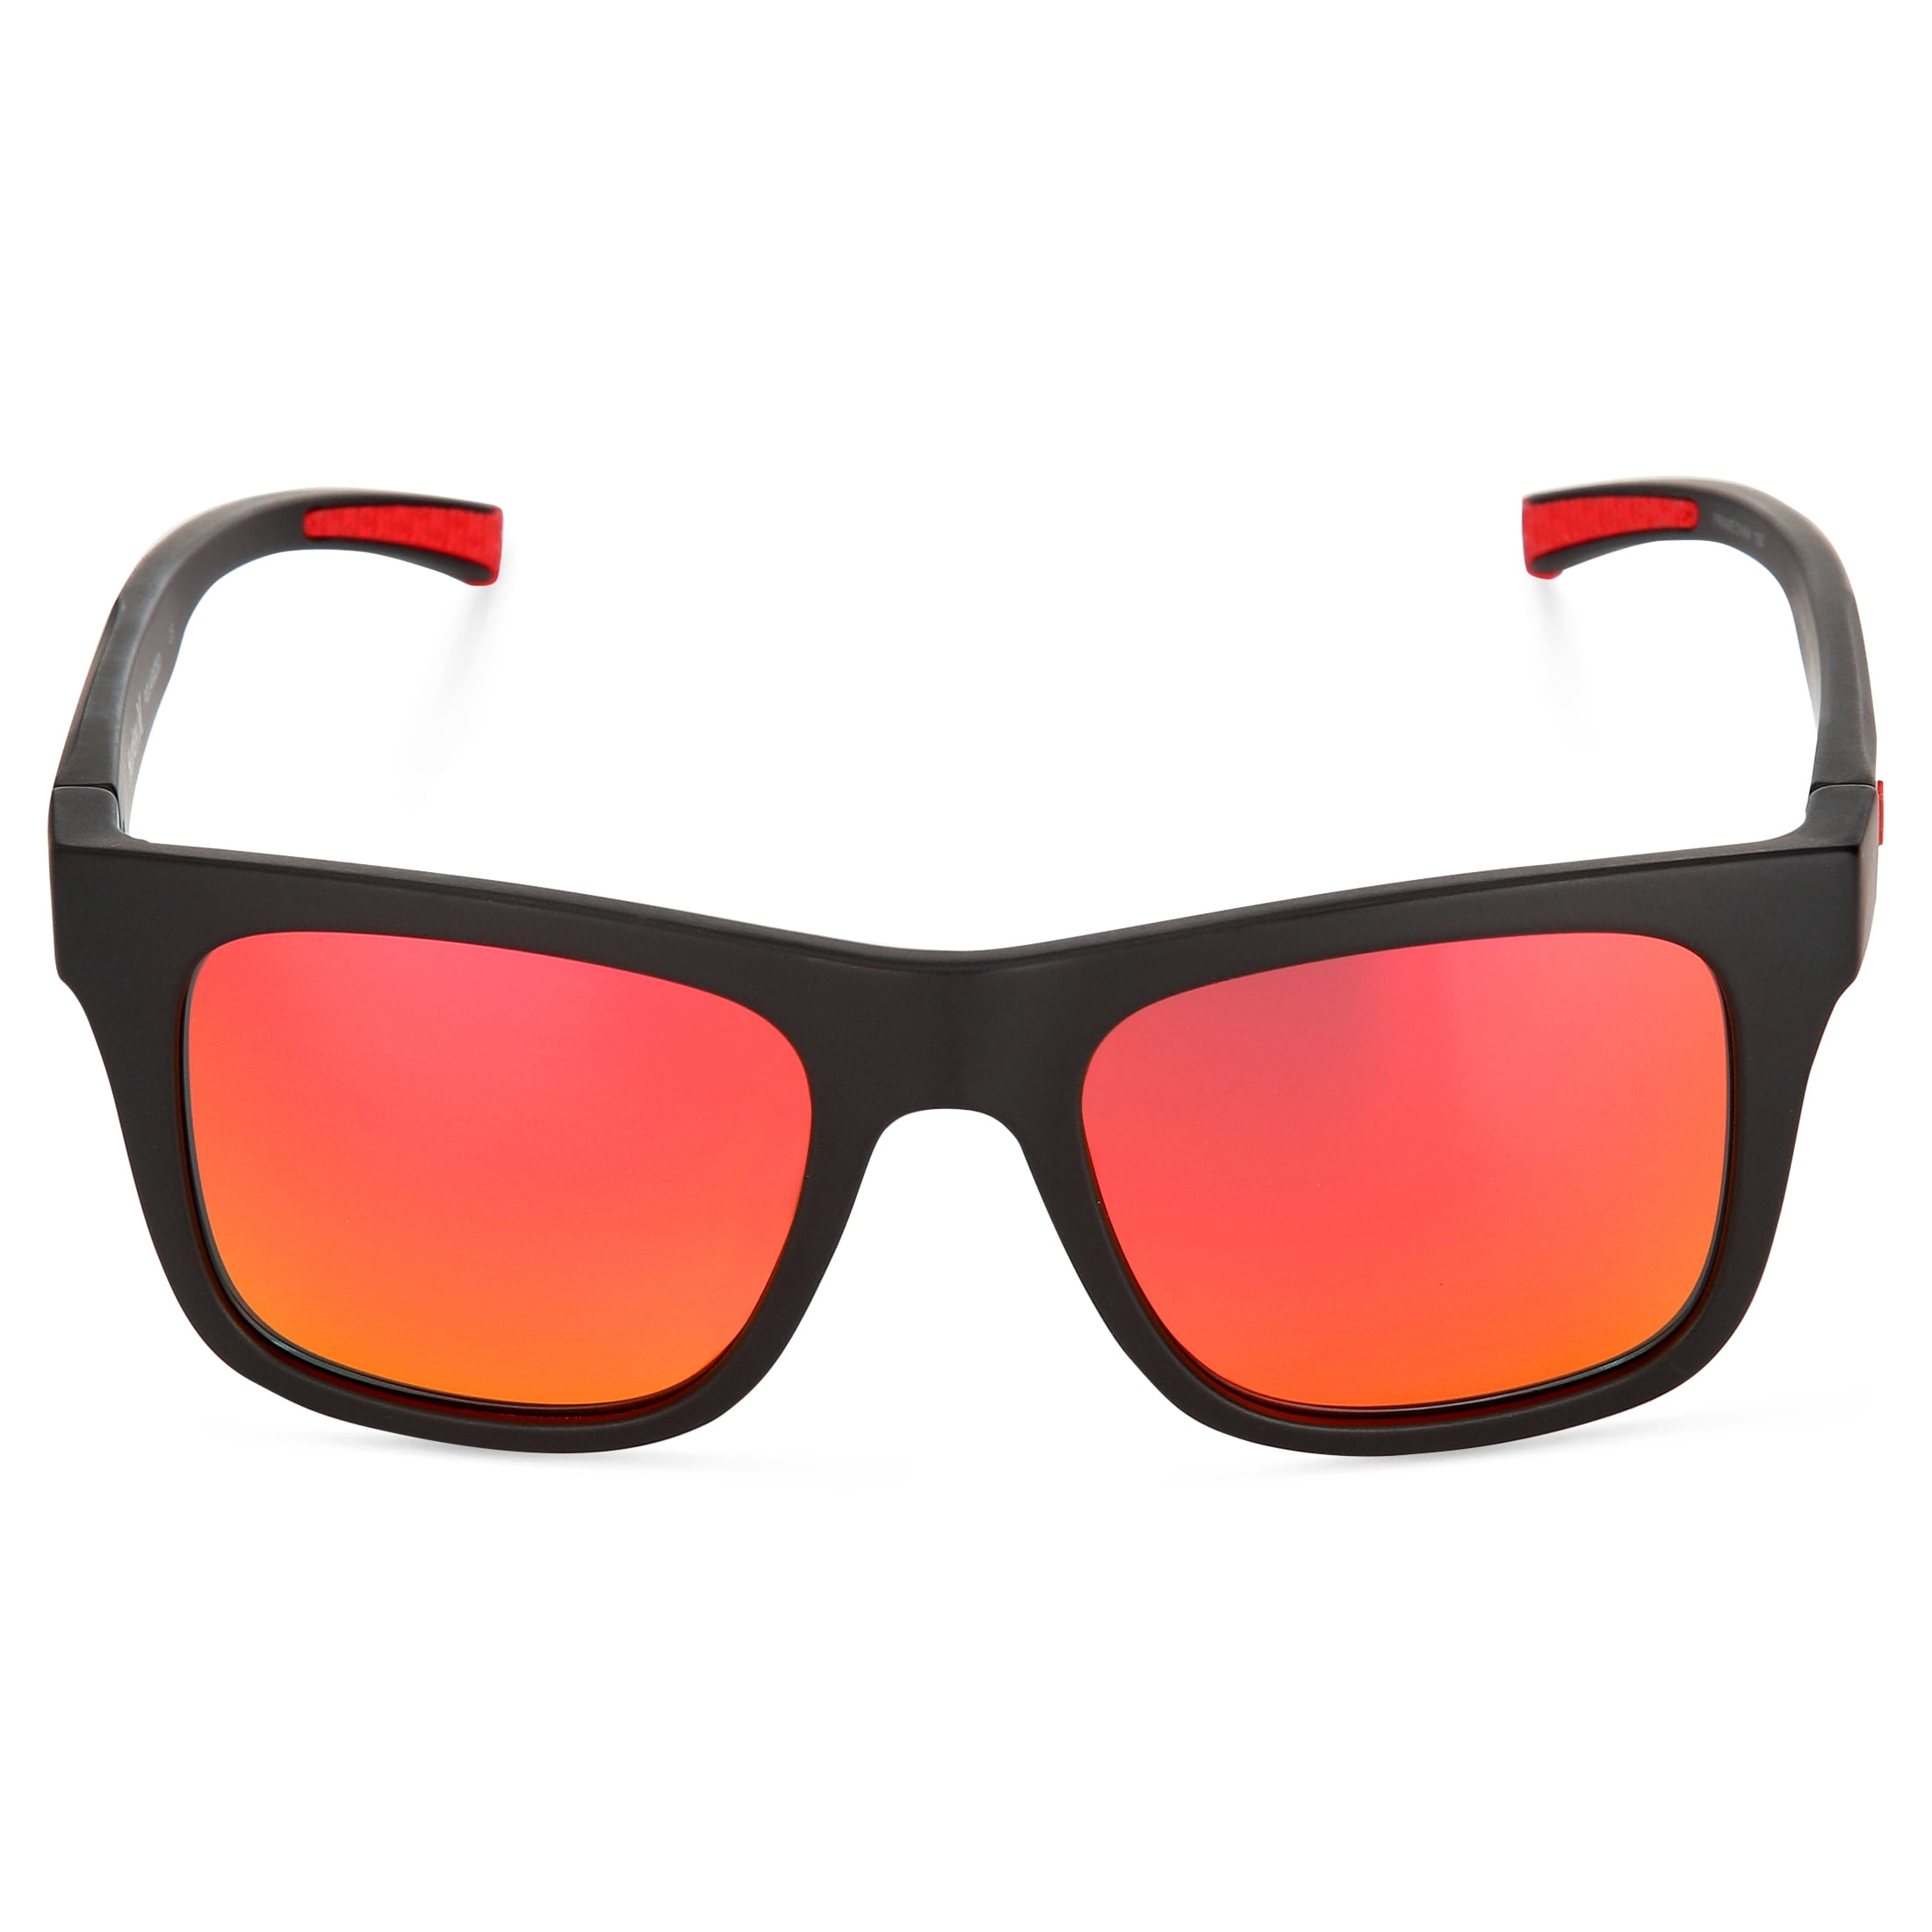 Hurley Men's Rx'able Sport Polarized Sunglasses, HSM3000P Sunrise